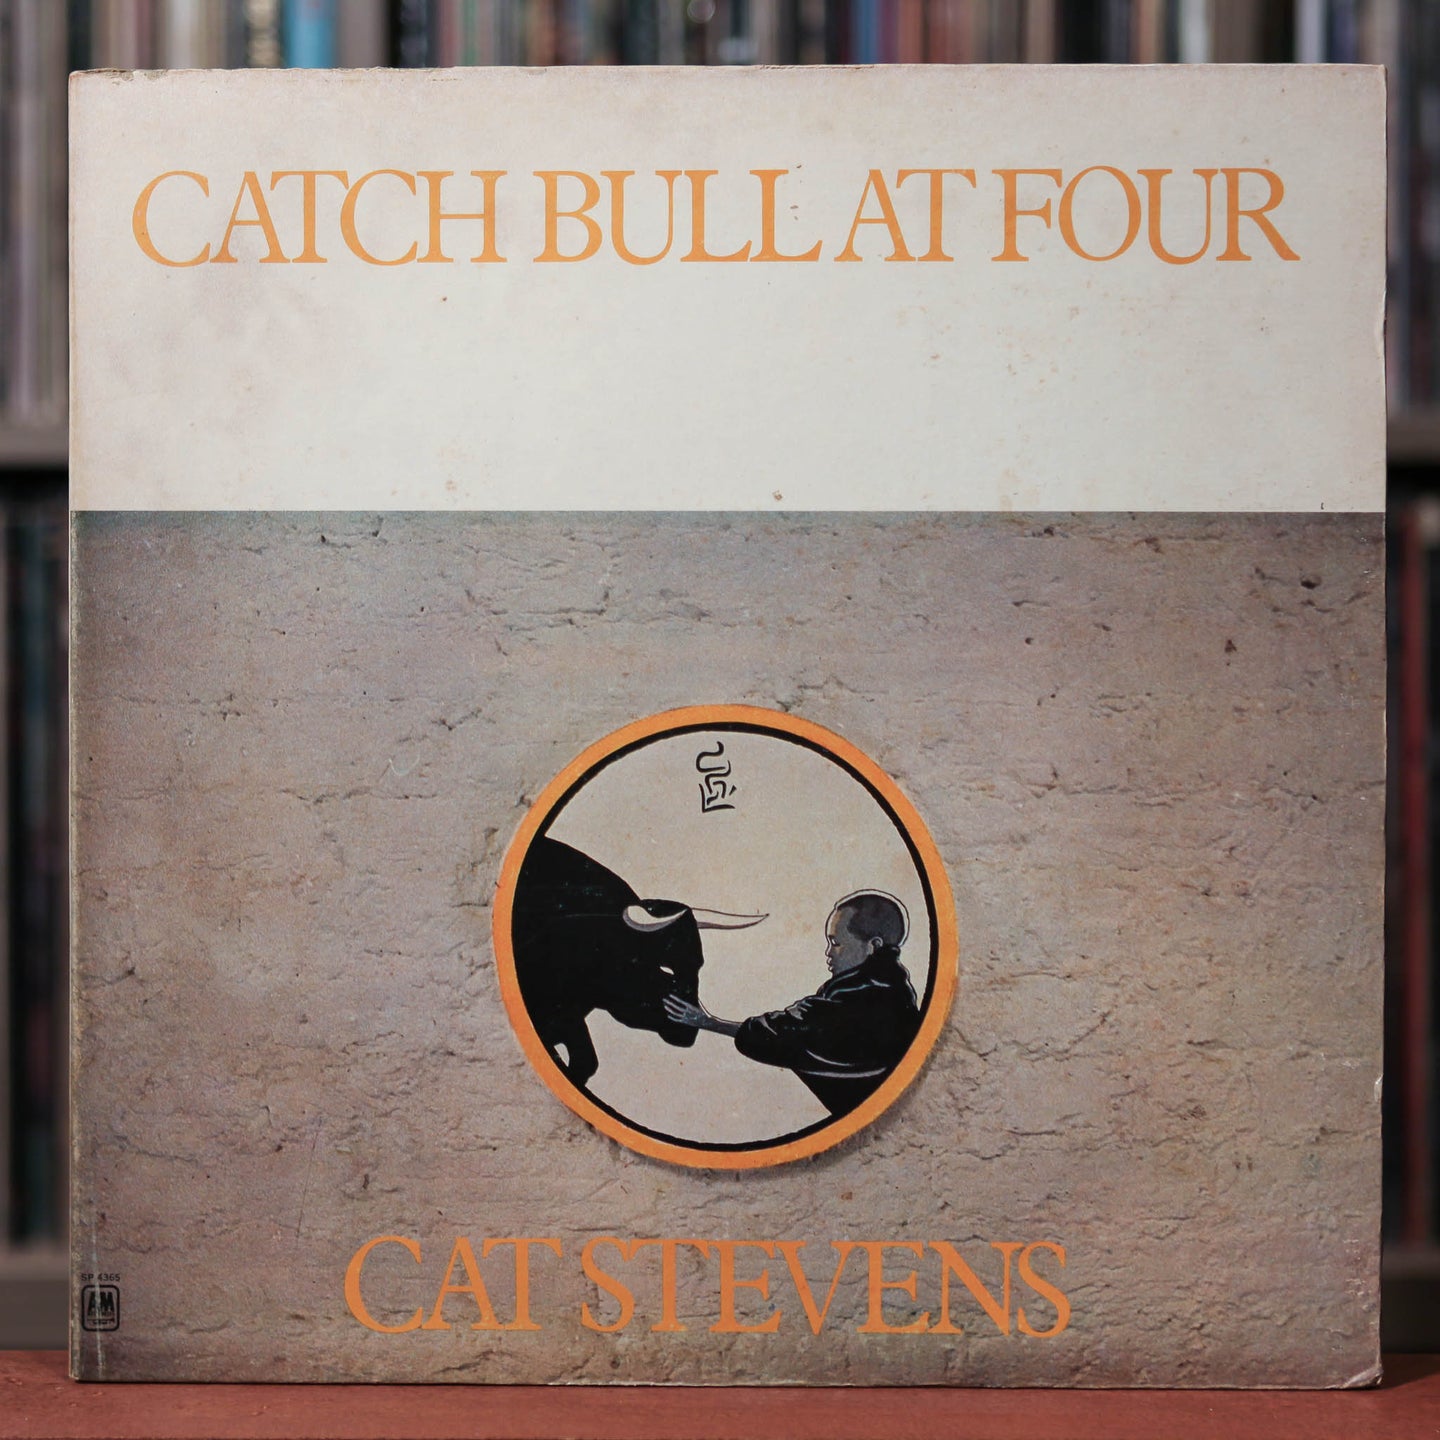 Cat Stevens - Catch Bull At Four - A&M, VG+/VG+